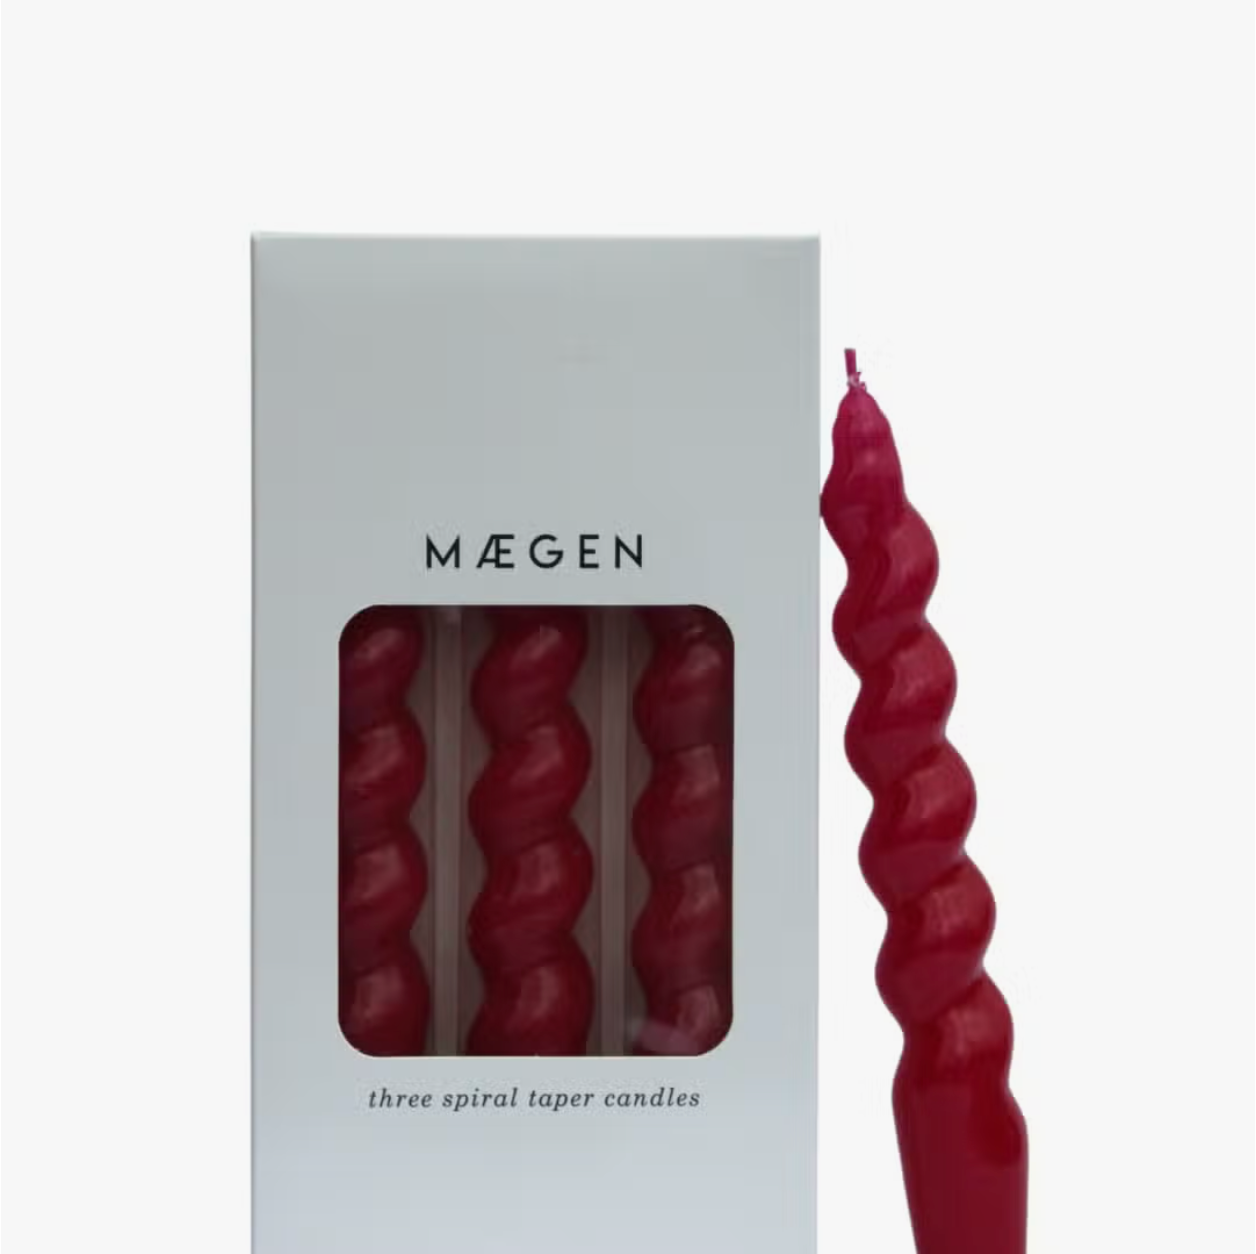 Spiral Taper Candles by Maegen Magenta Red